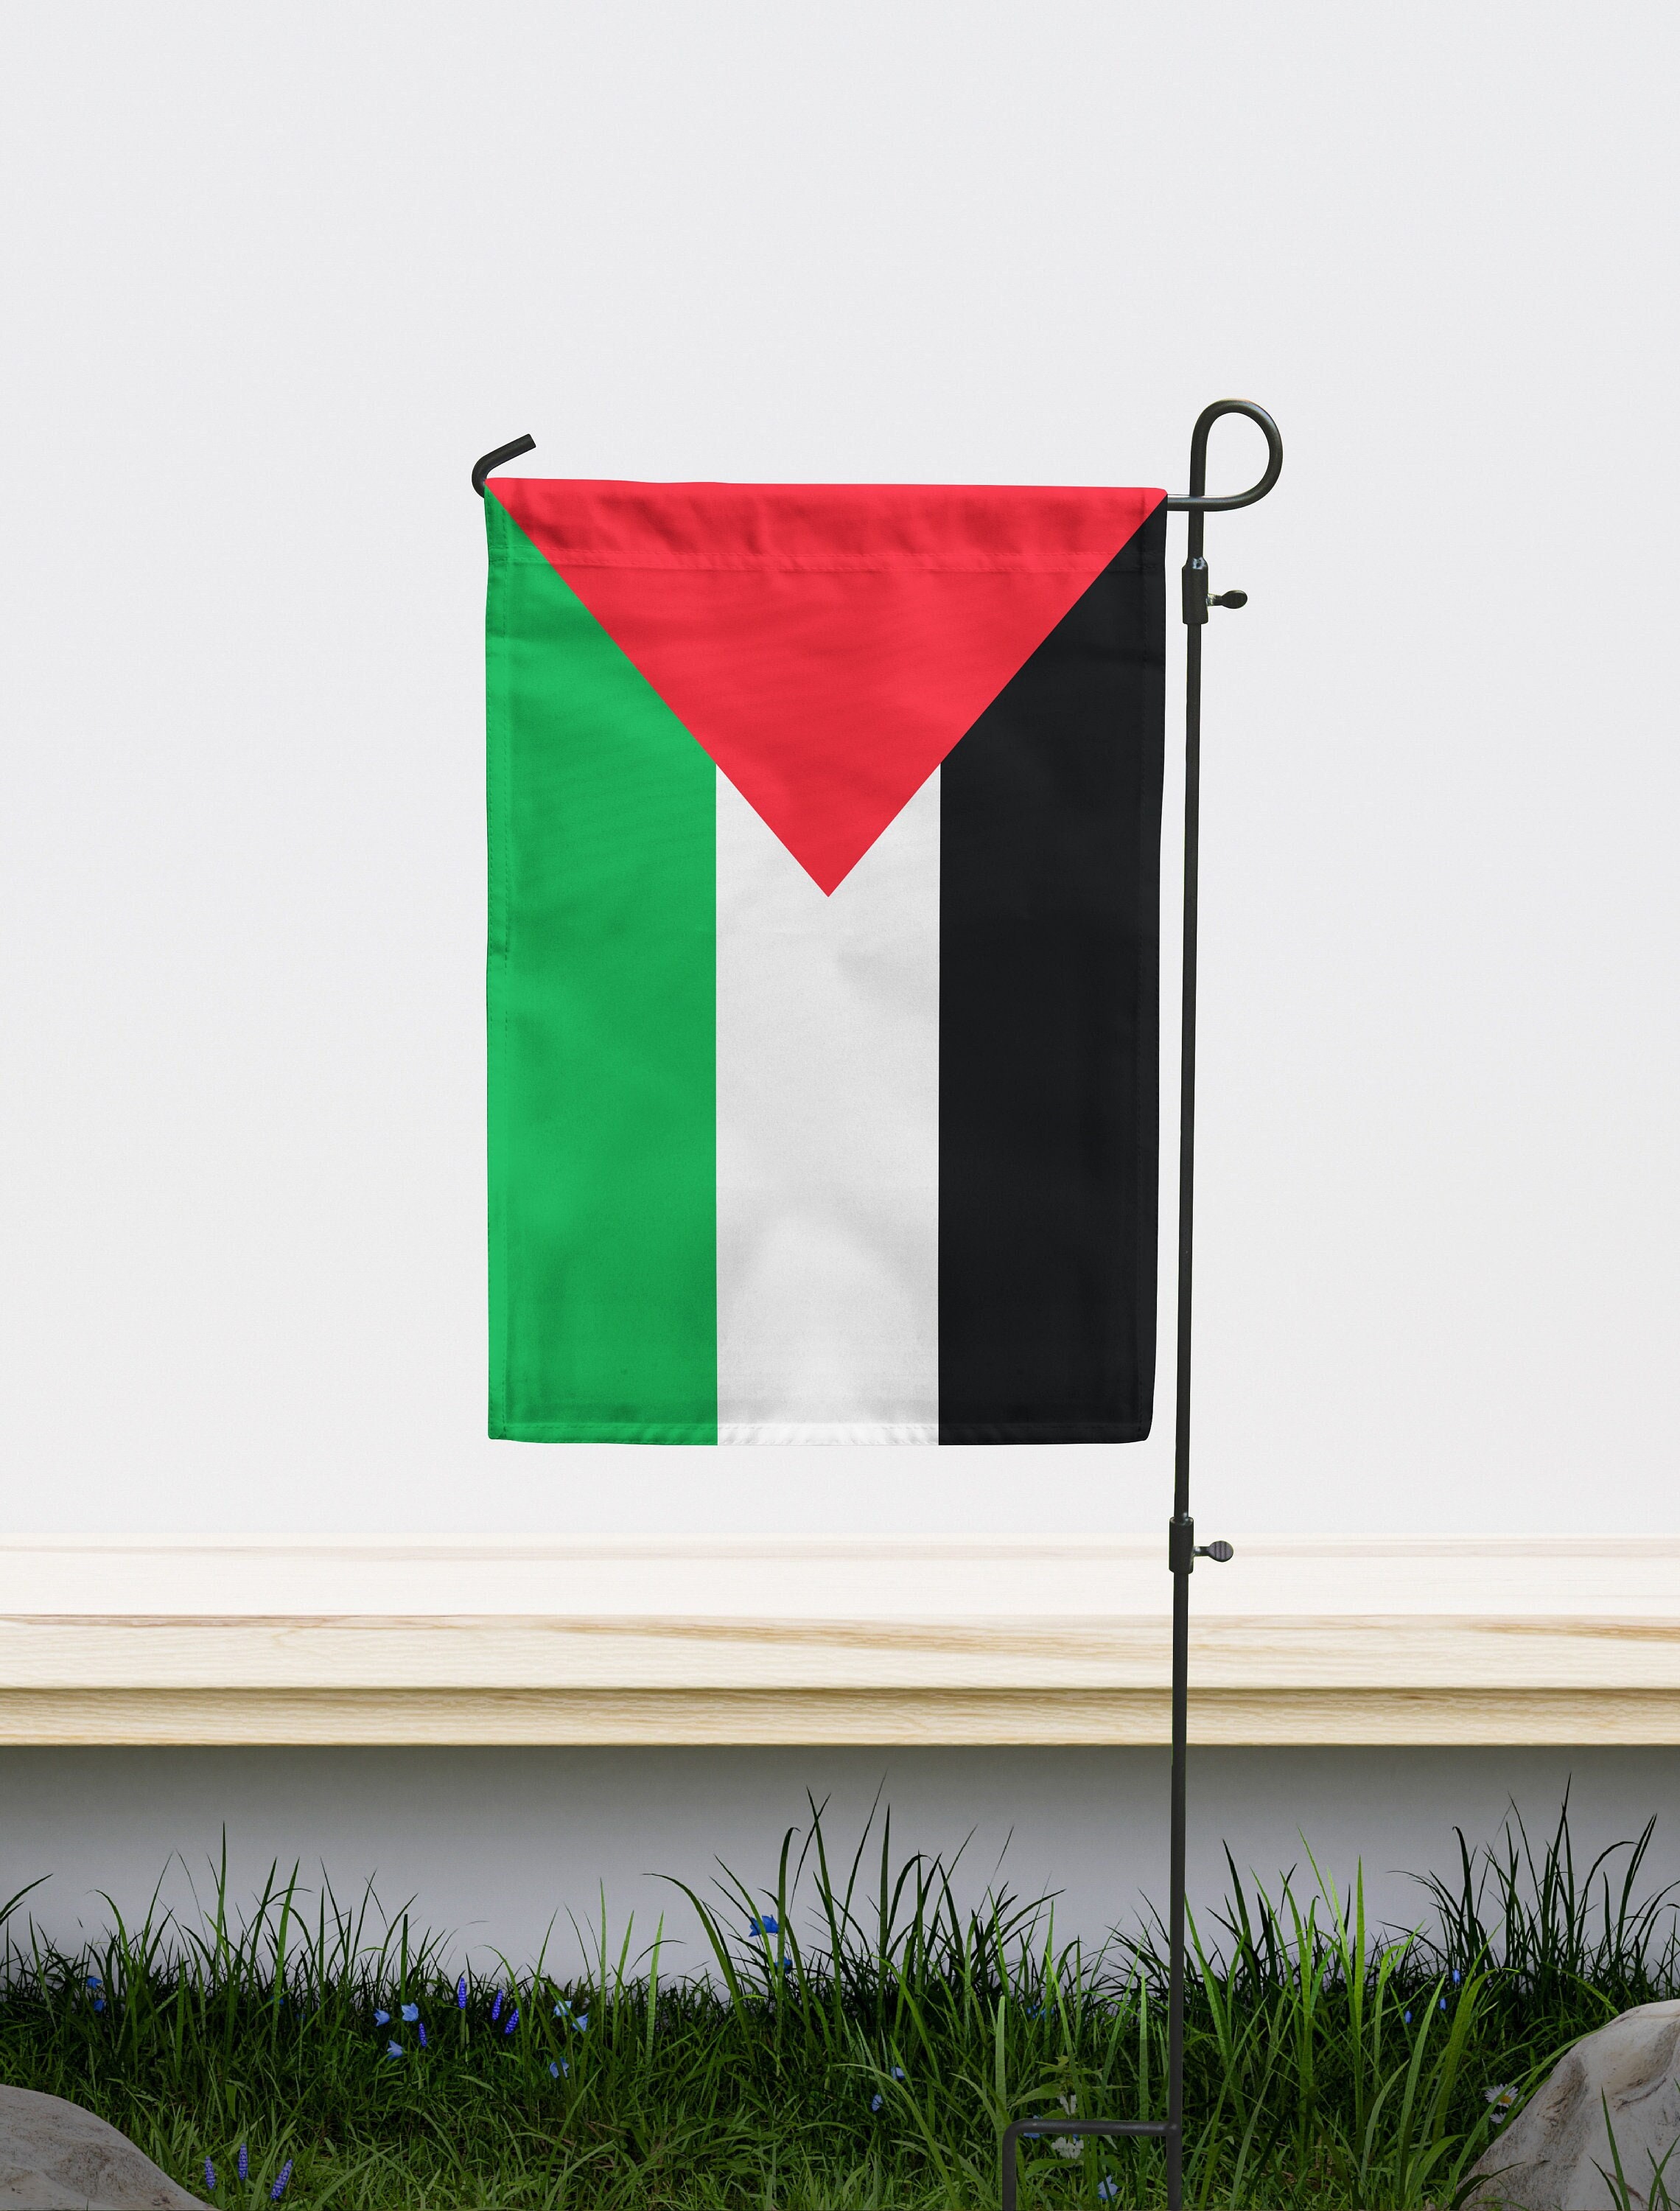 National Flagge im Vintage Design Palästina Flag Palestine